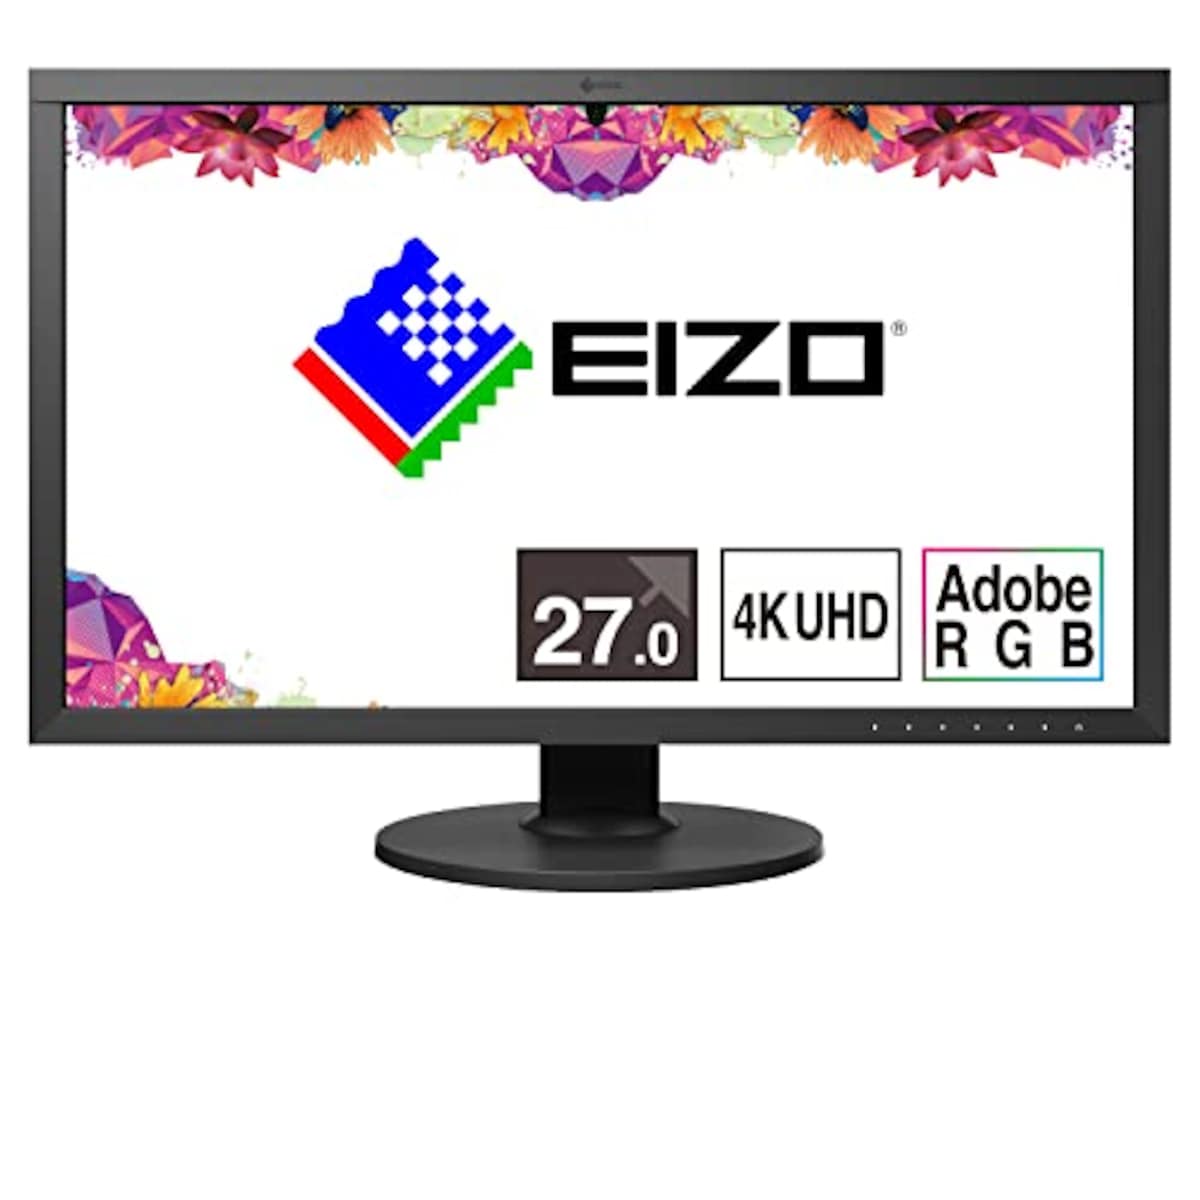 EIZO ColorEdge CS2740 (27型カラーマネージメント液晶モニター/4K UHD/Adobe RGB 99%/USB Type-C/)